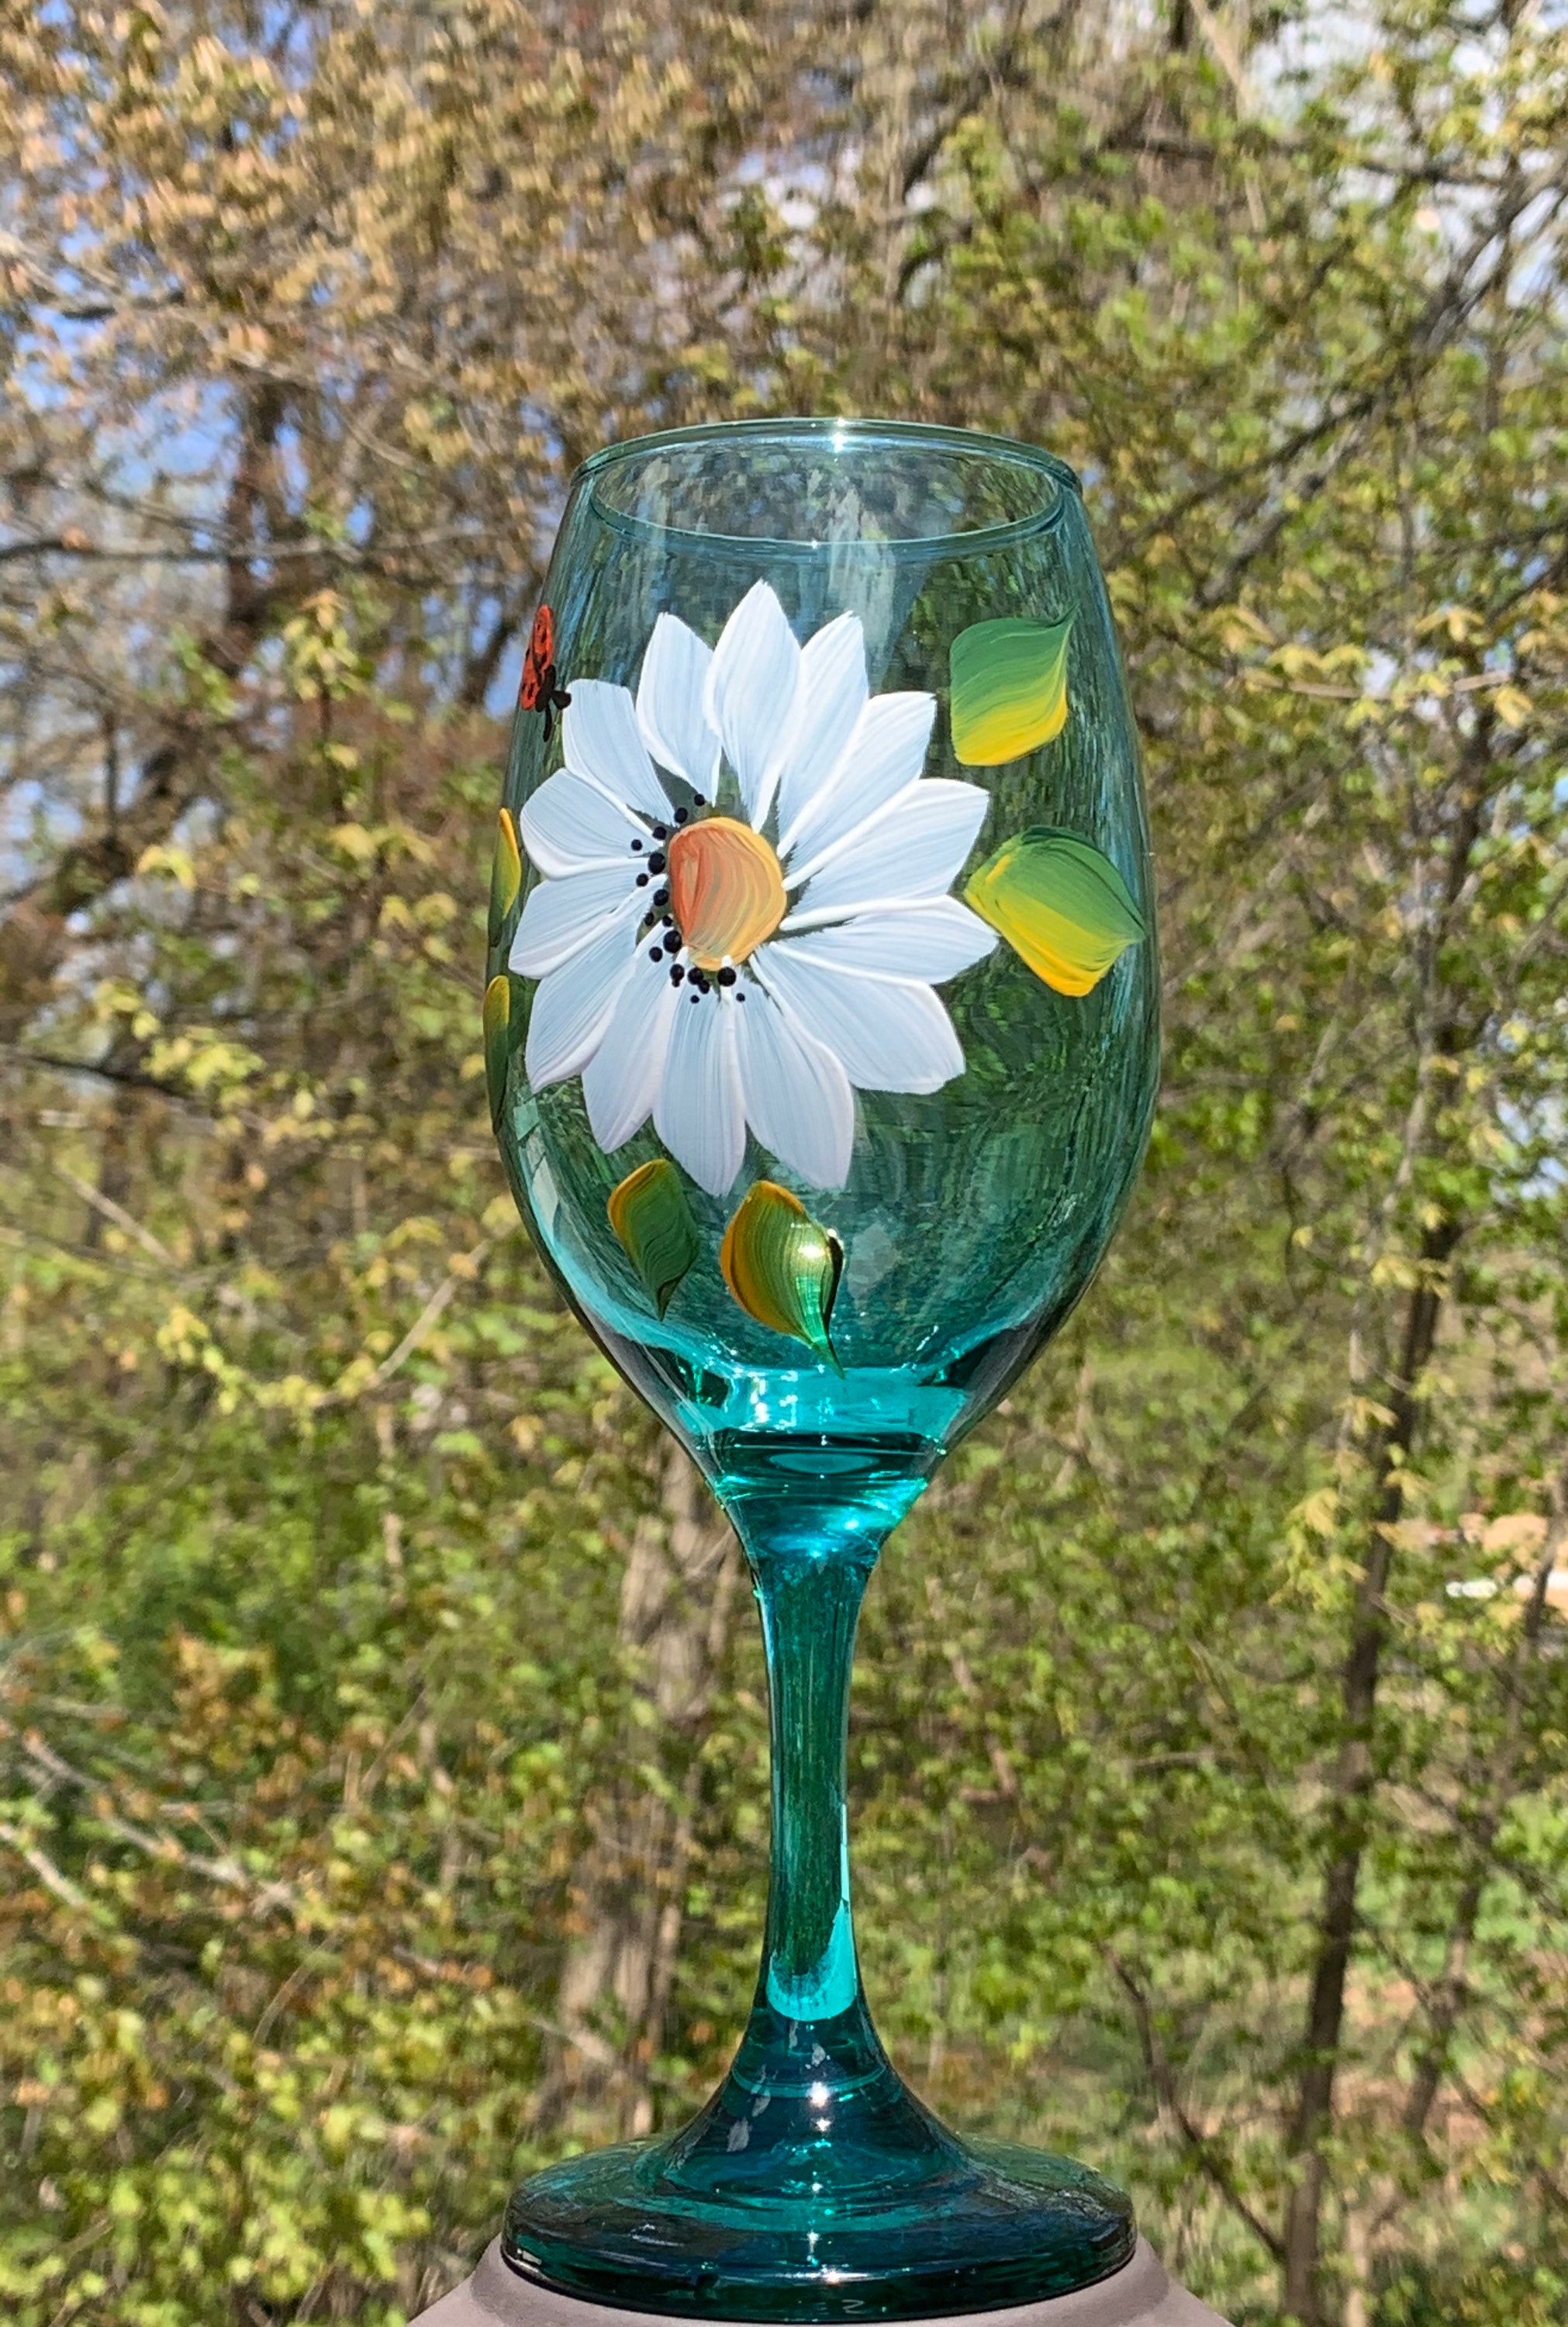 Hand Painted Wine Glasses Daisies Cute Ladybug, Summer Wine Glass